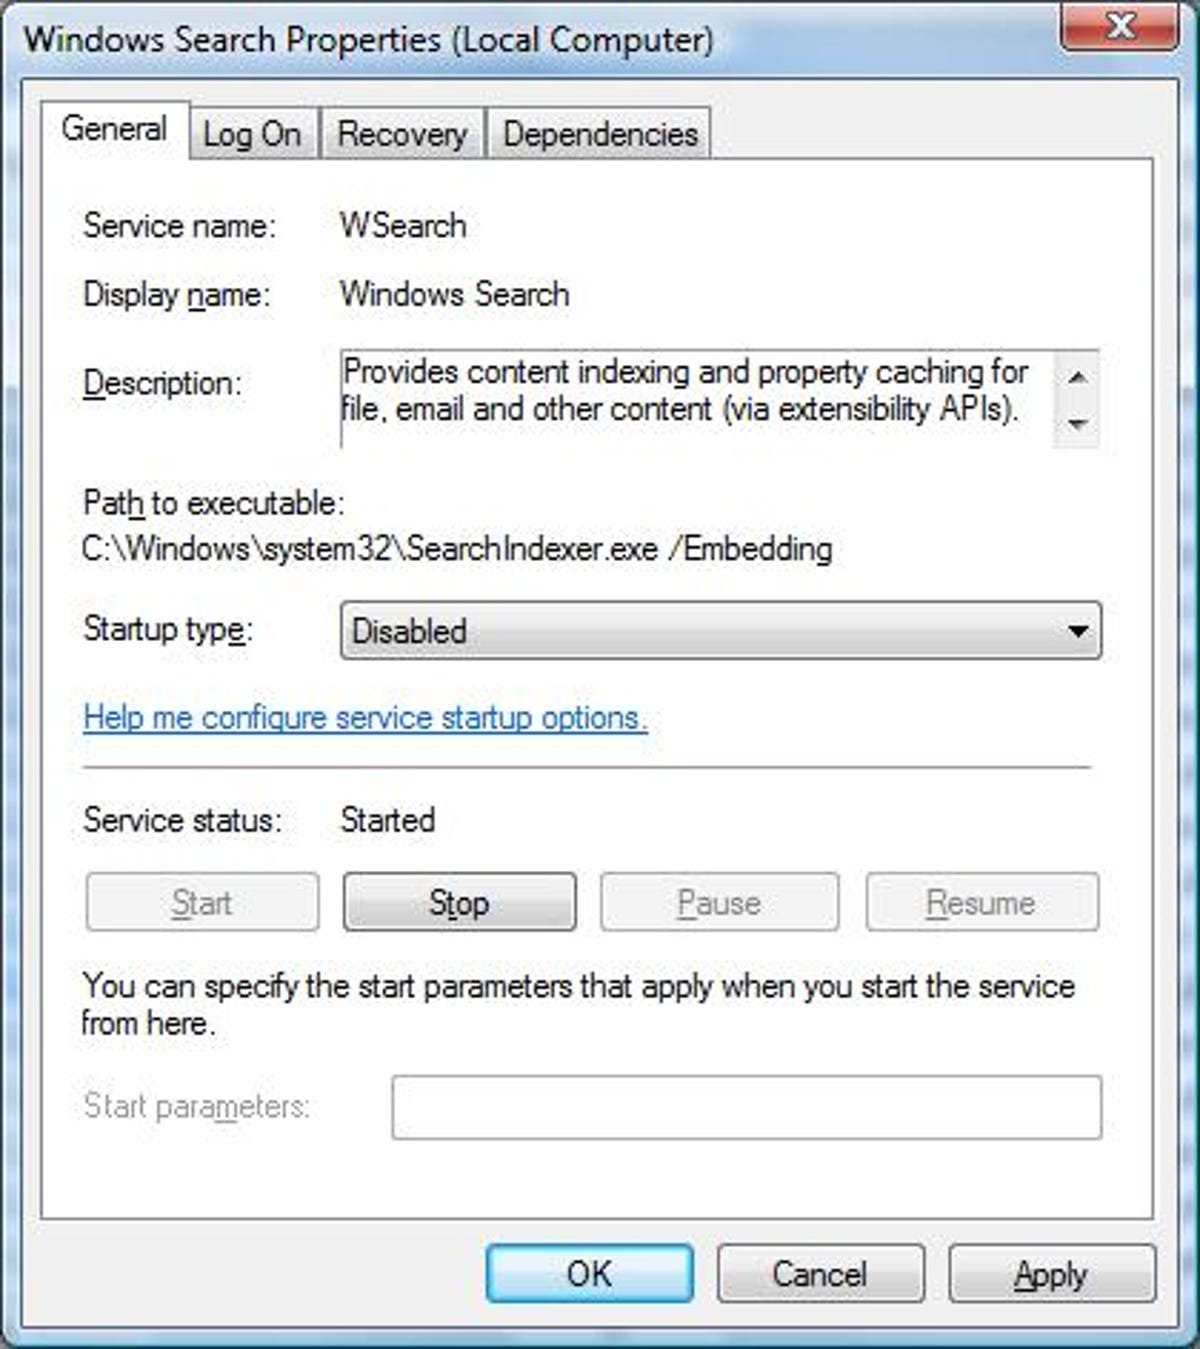 Vista's Windows Search Properties dialog box